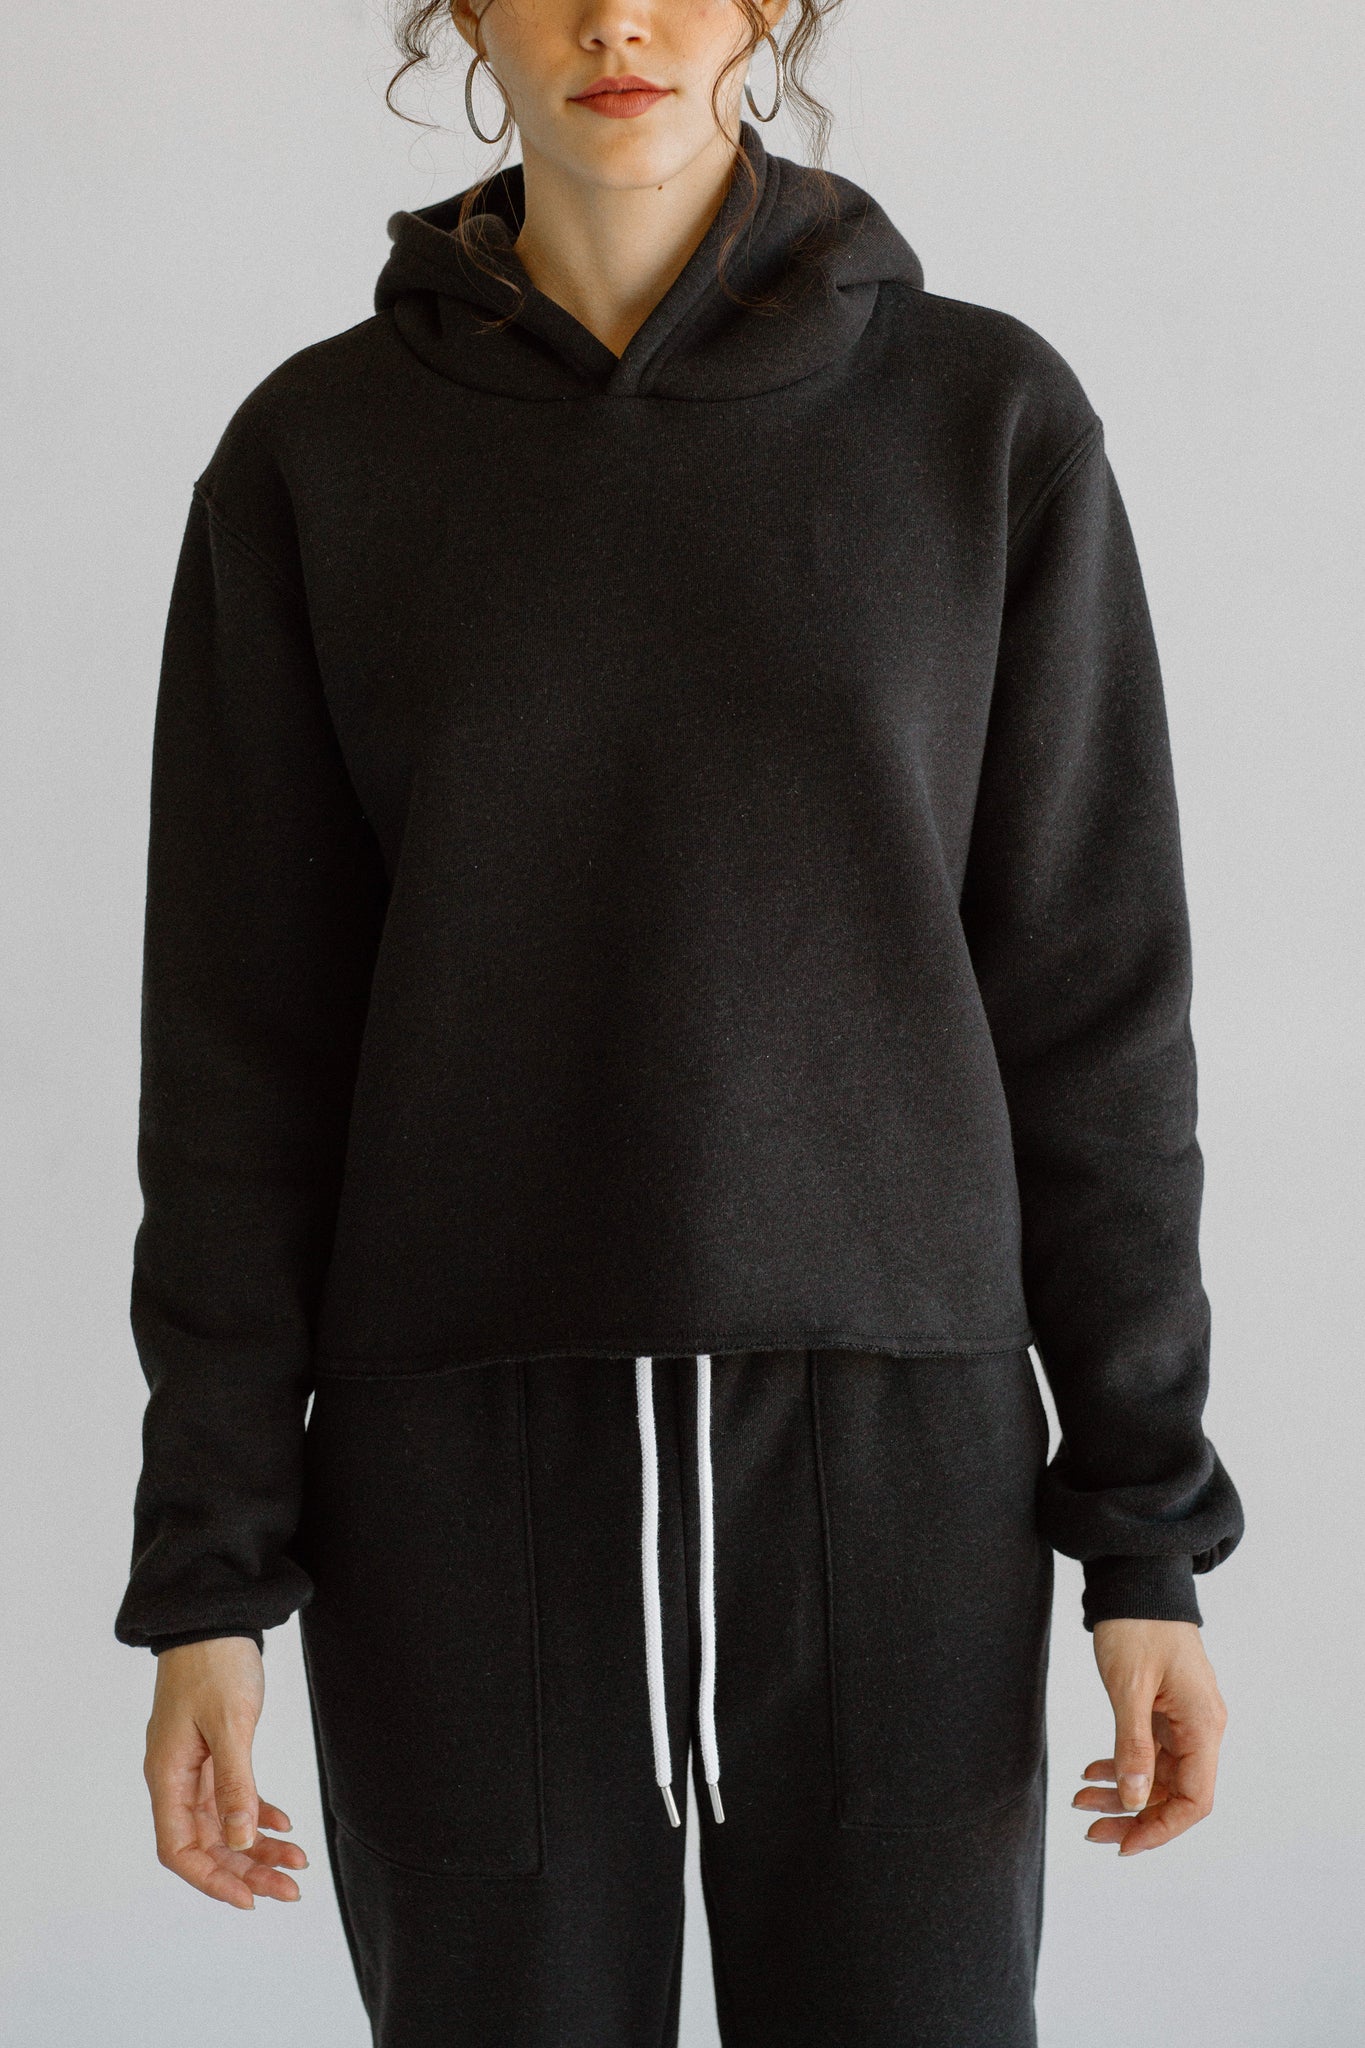 Tri-Blend Fleece Hooded Pullover Sweatshirt Black